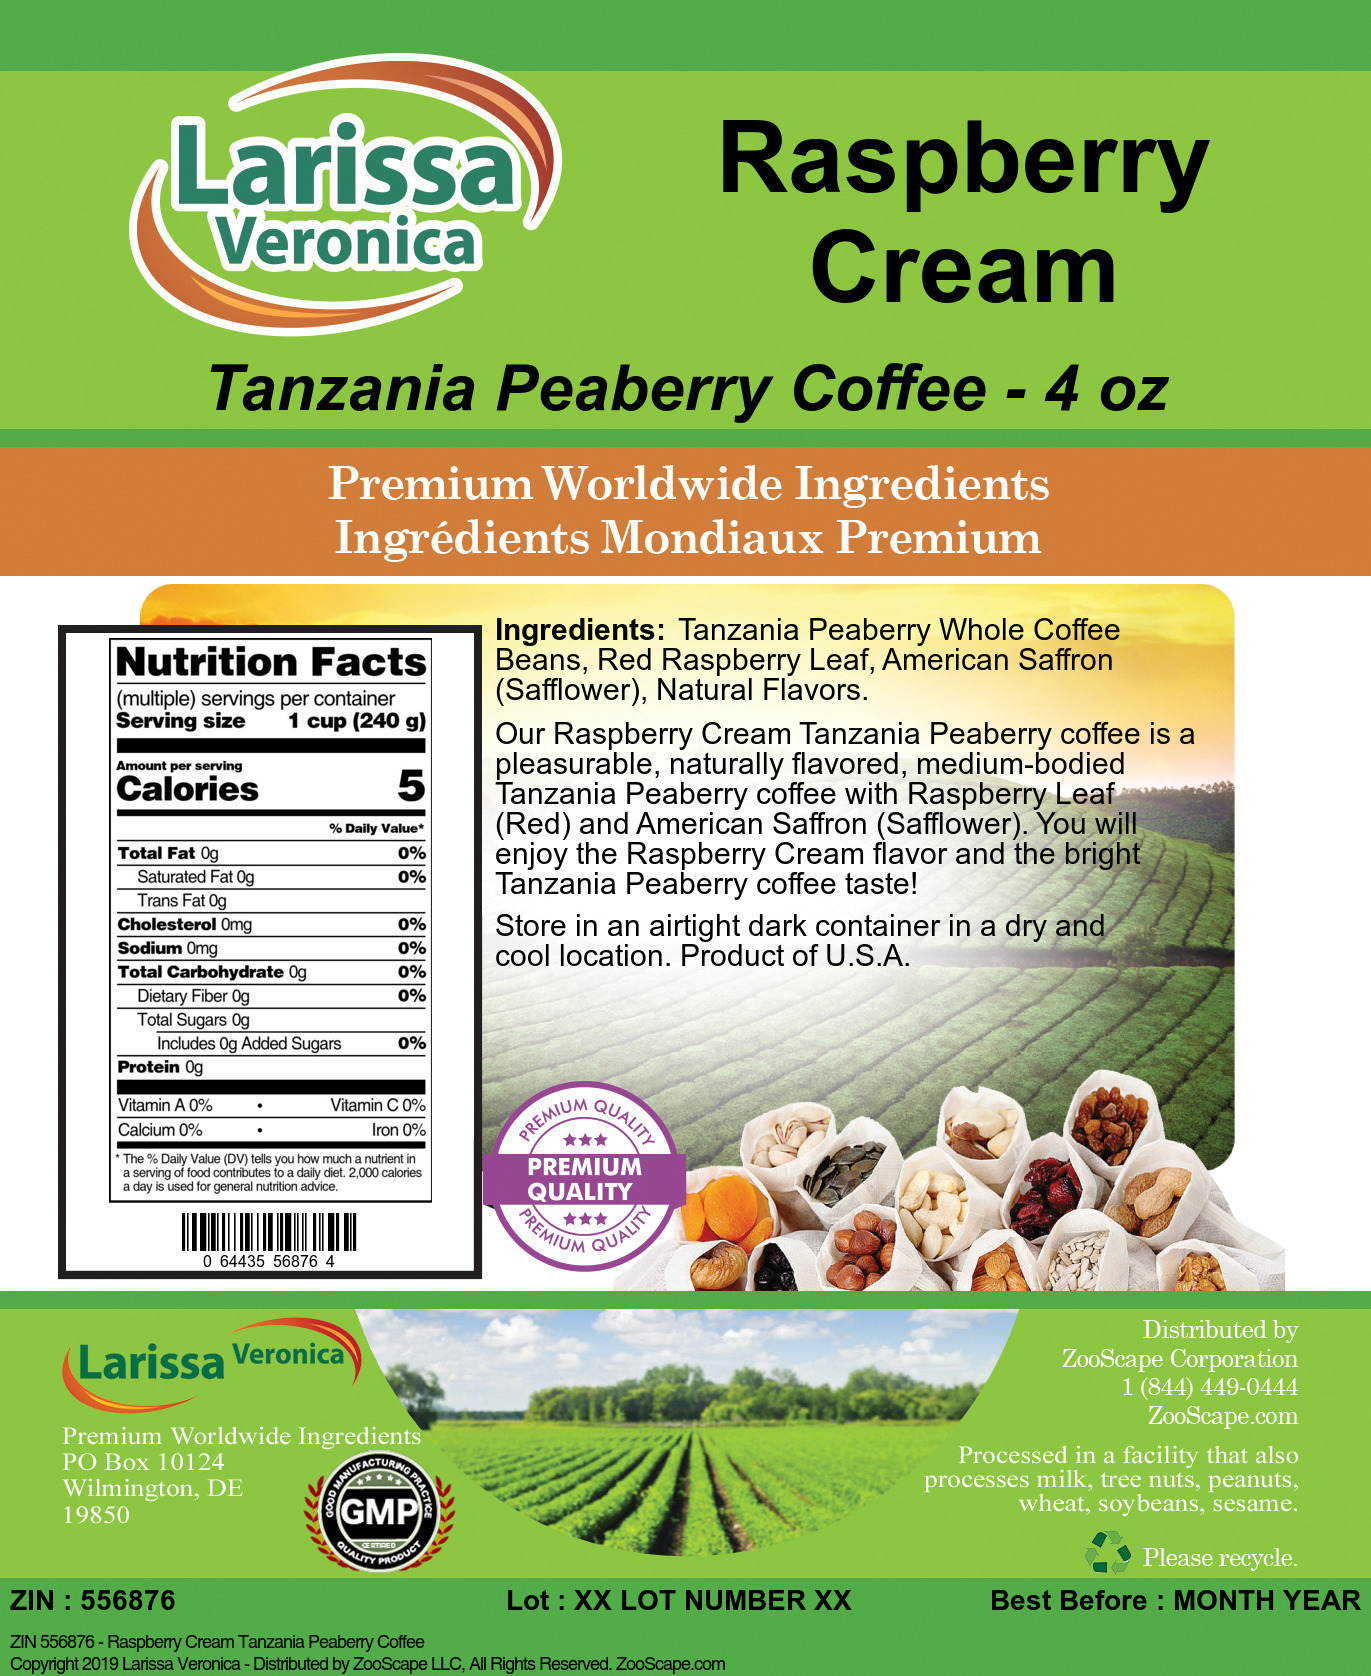 Raspberry Cream Tanzania Peaberry Coffee - Label